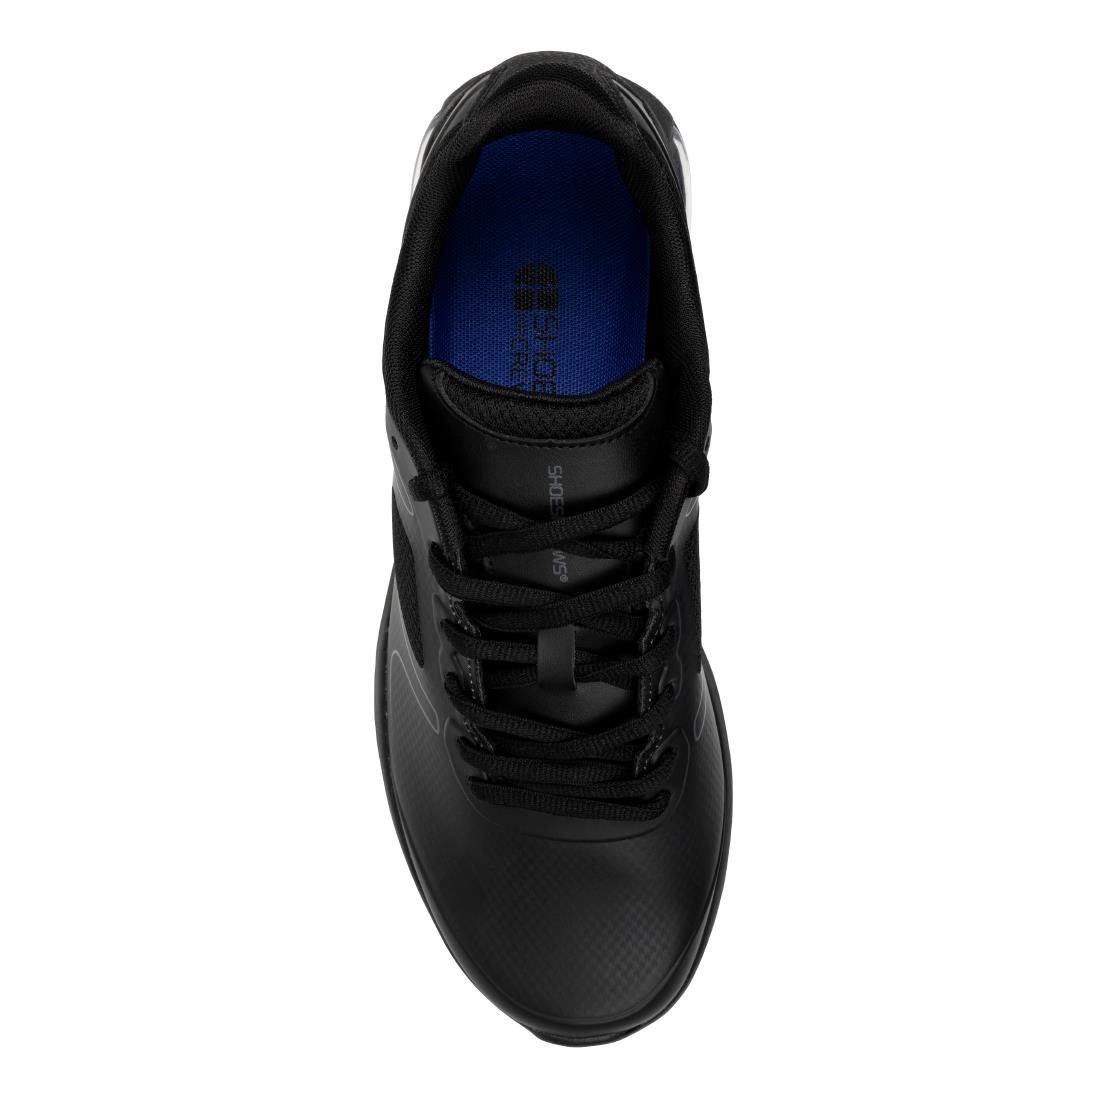 BB586-46 Shoes for Crews Men's Evolution Trainers Black Size 46